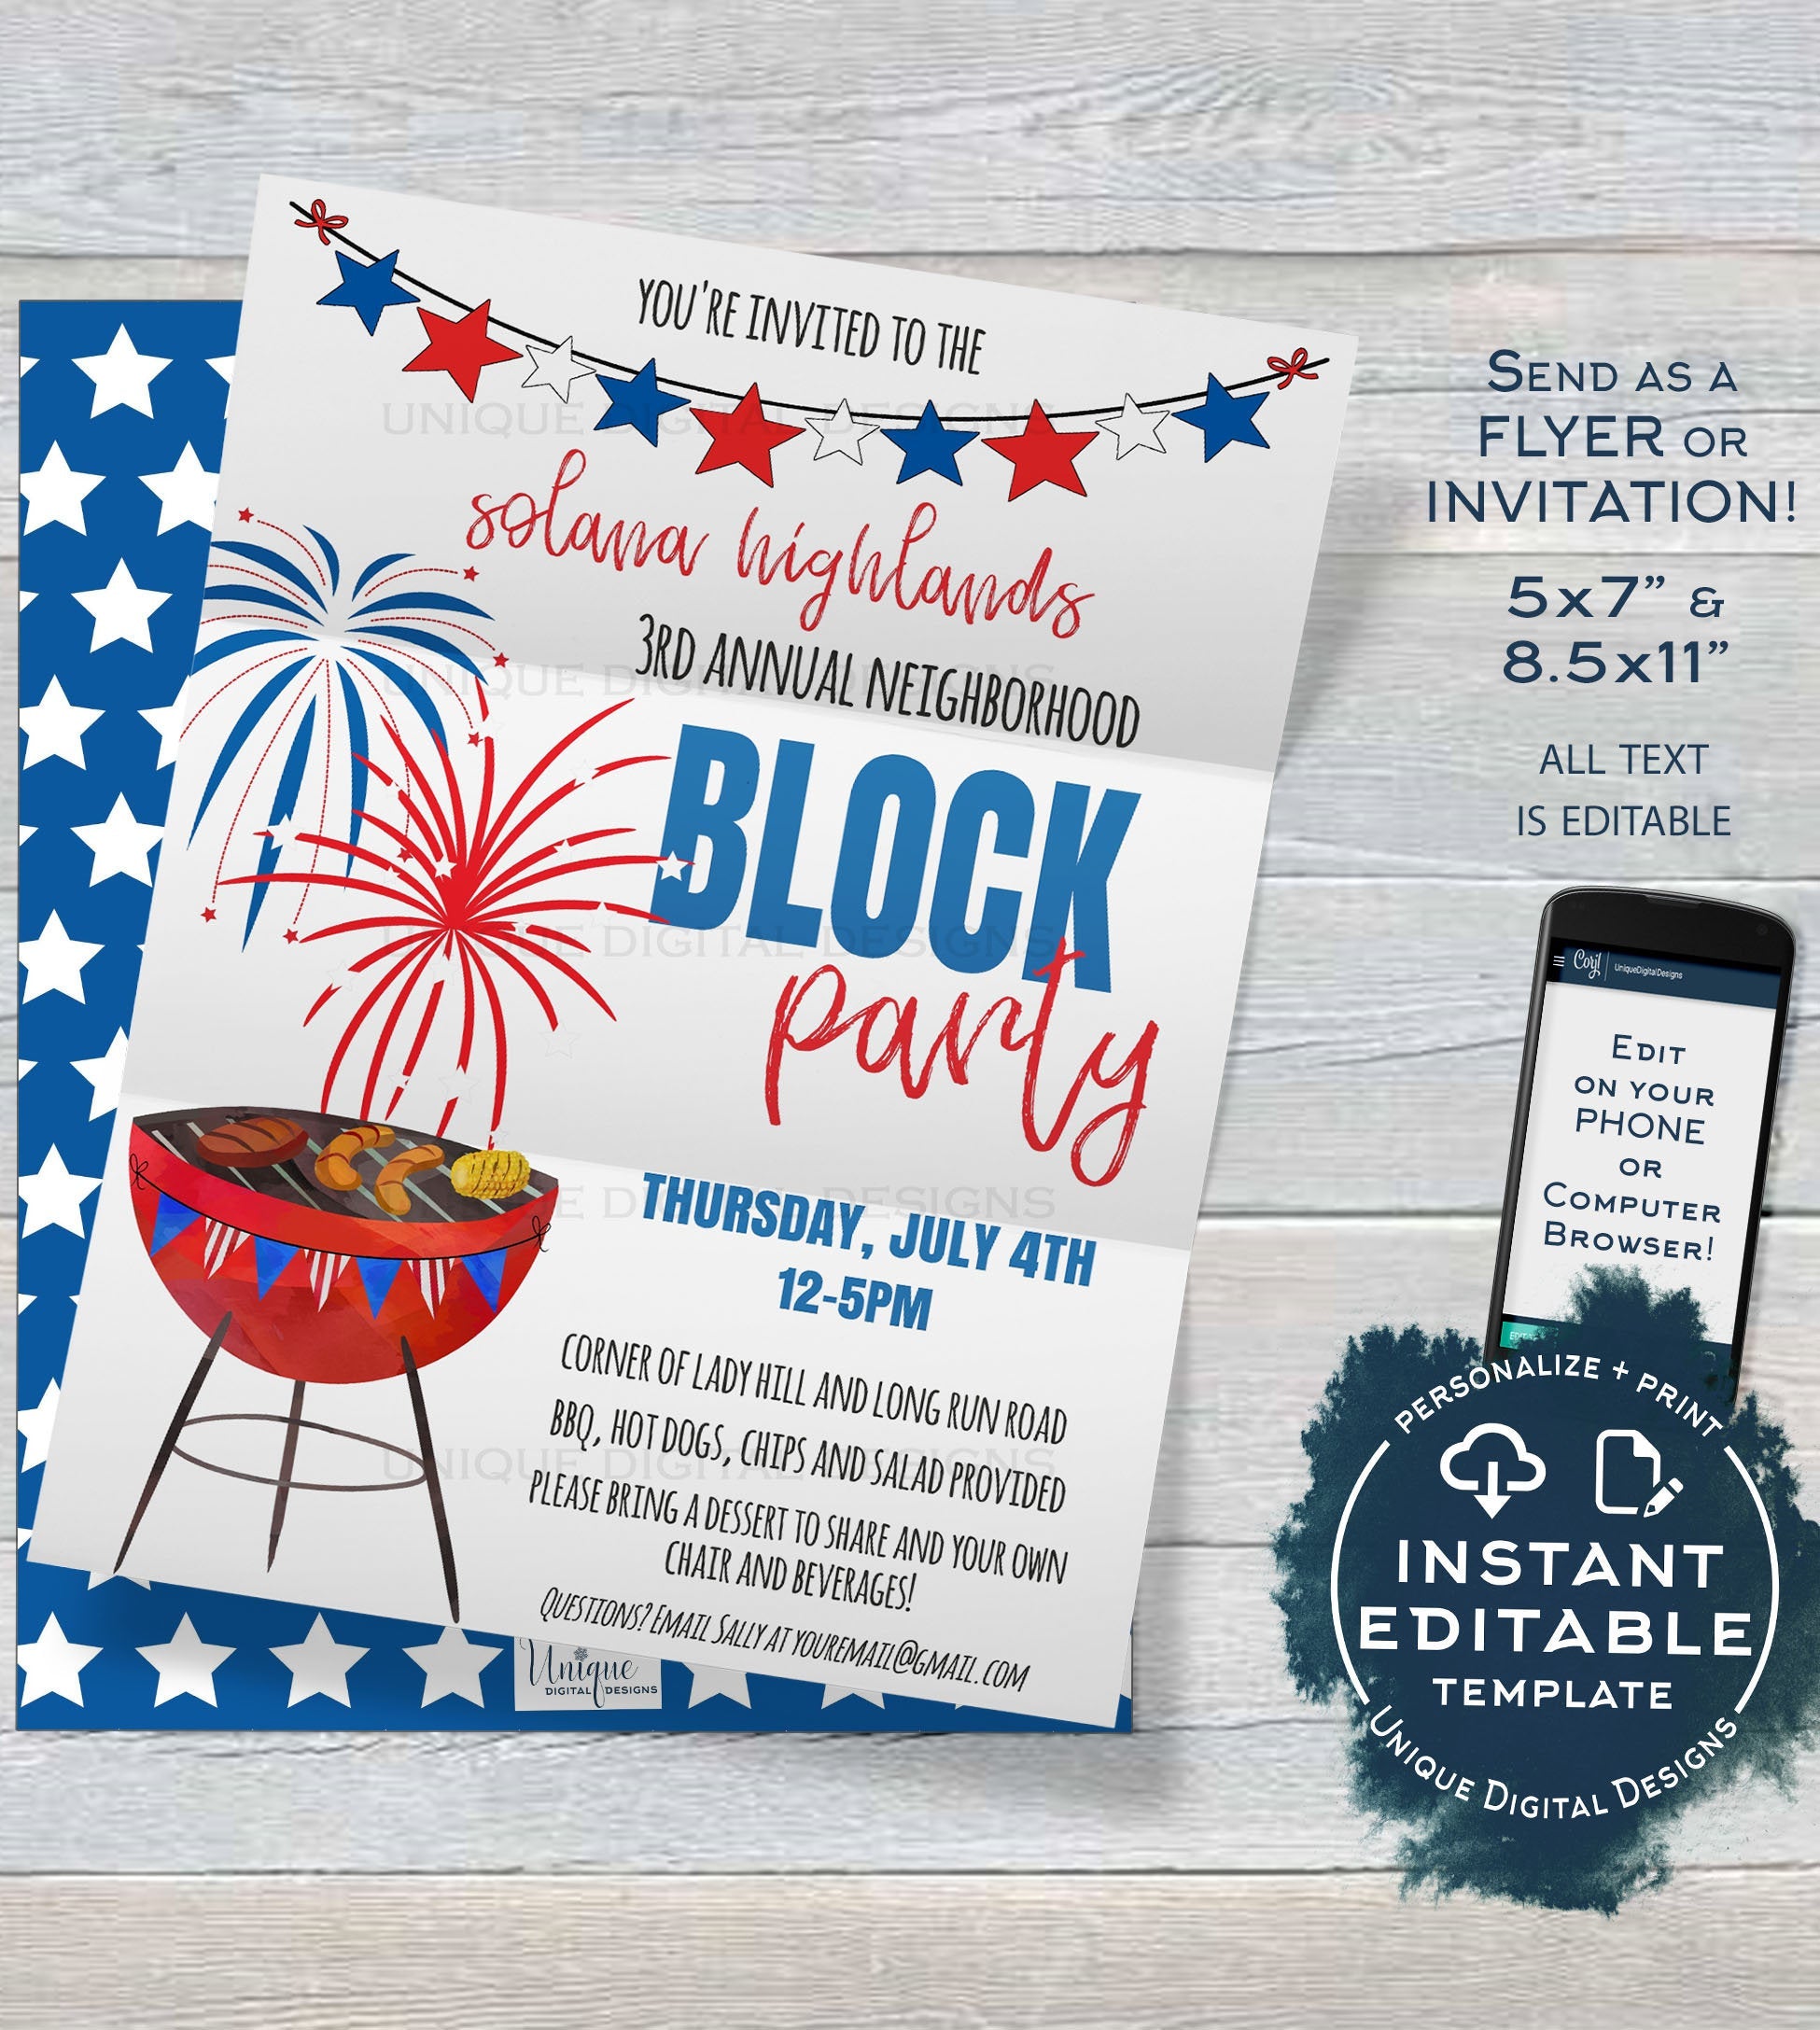 Editable Block Party Flyer, 22th of July Neighborhood Street Party Invi Regarding Block Party Template Flyer